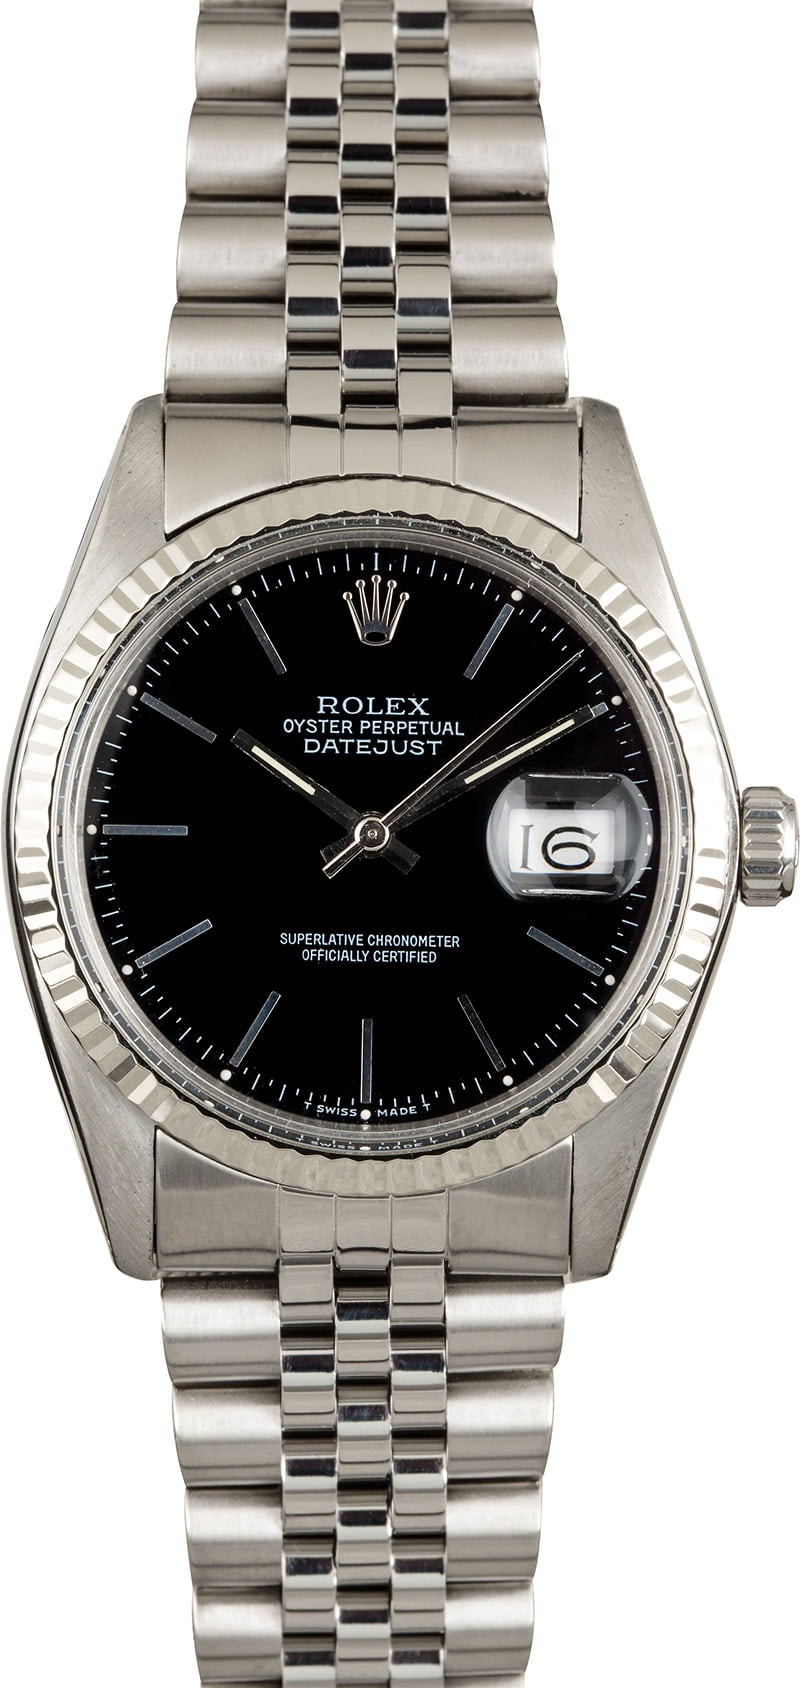 Imitation Rolex Datejust 16014 Black Index Dial Jubilee Band WE04302